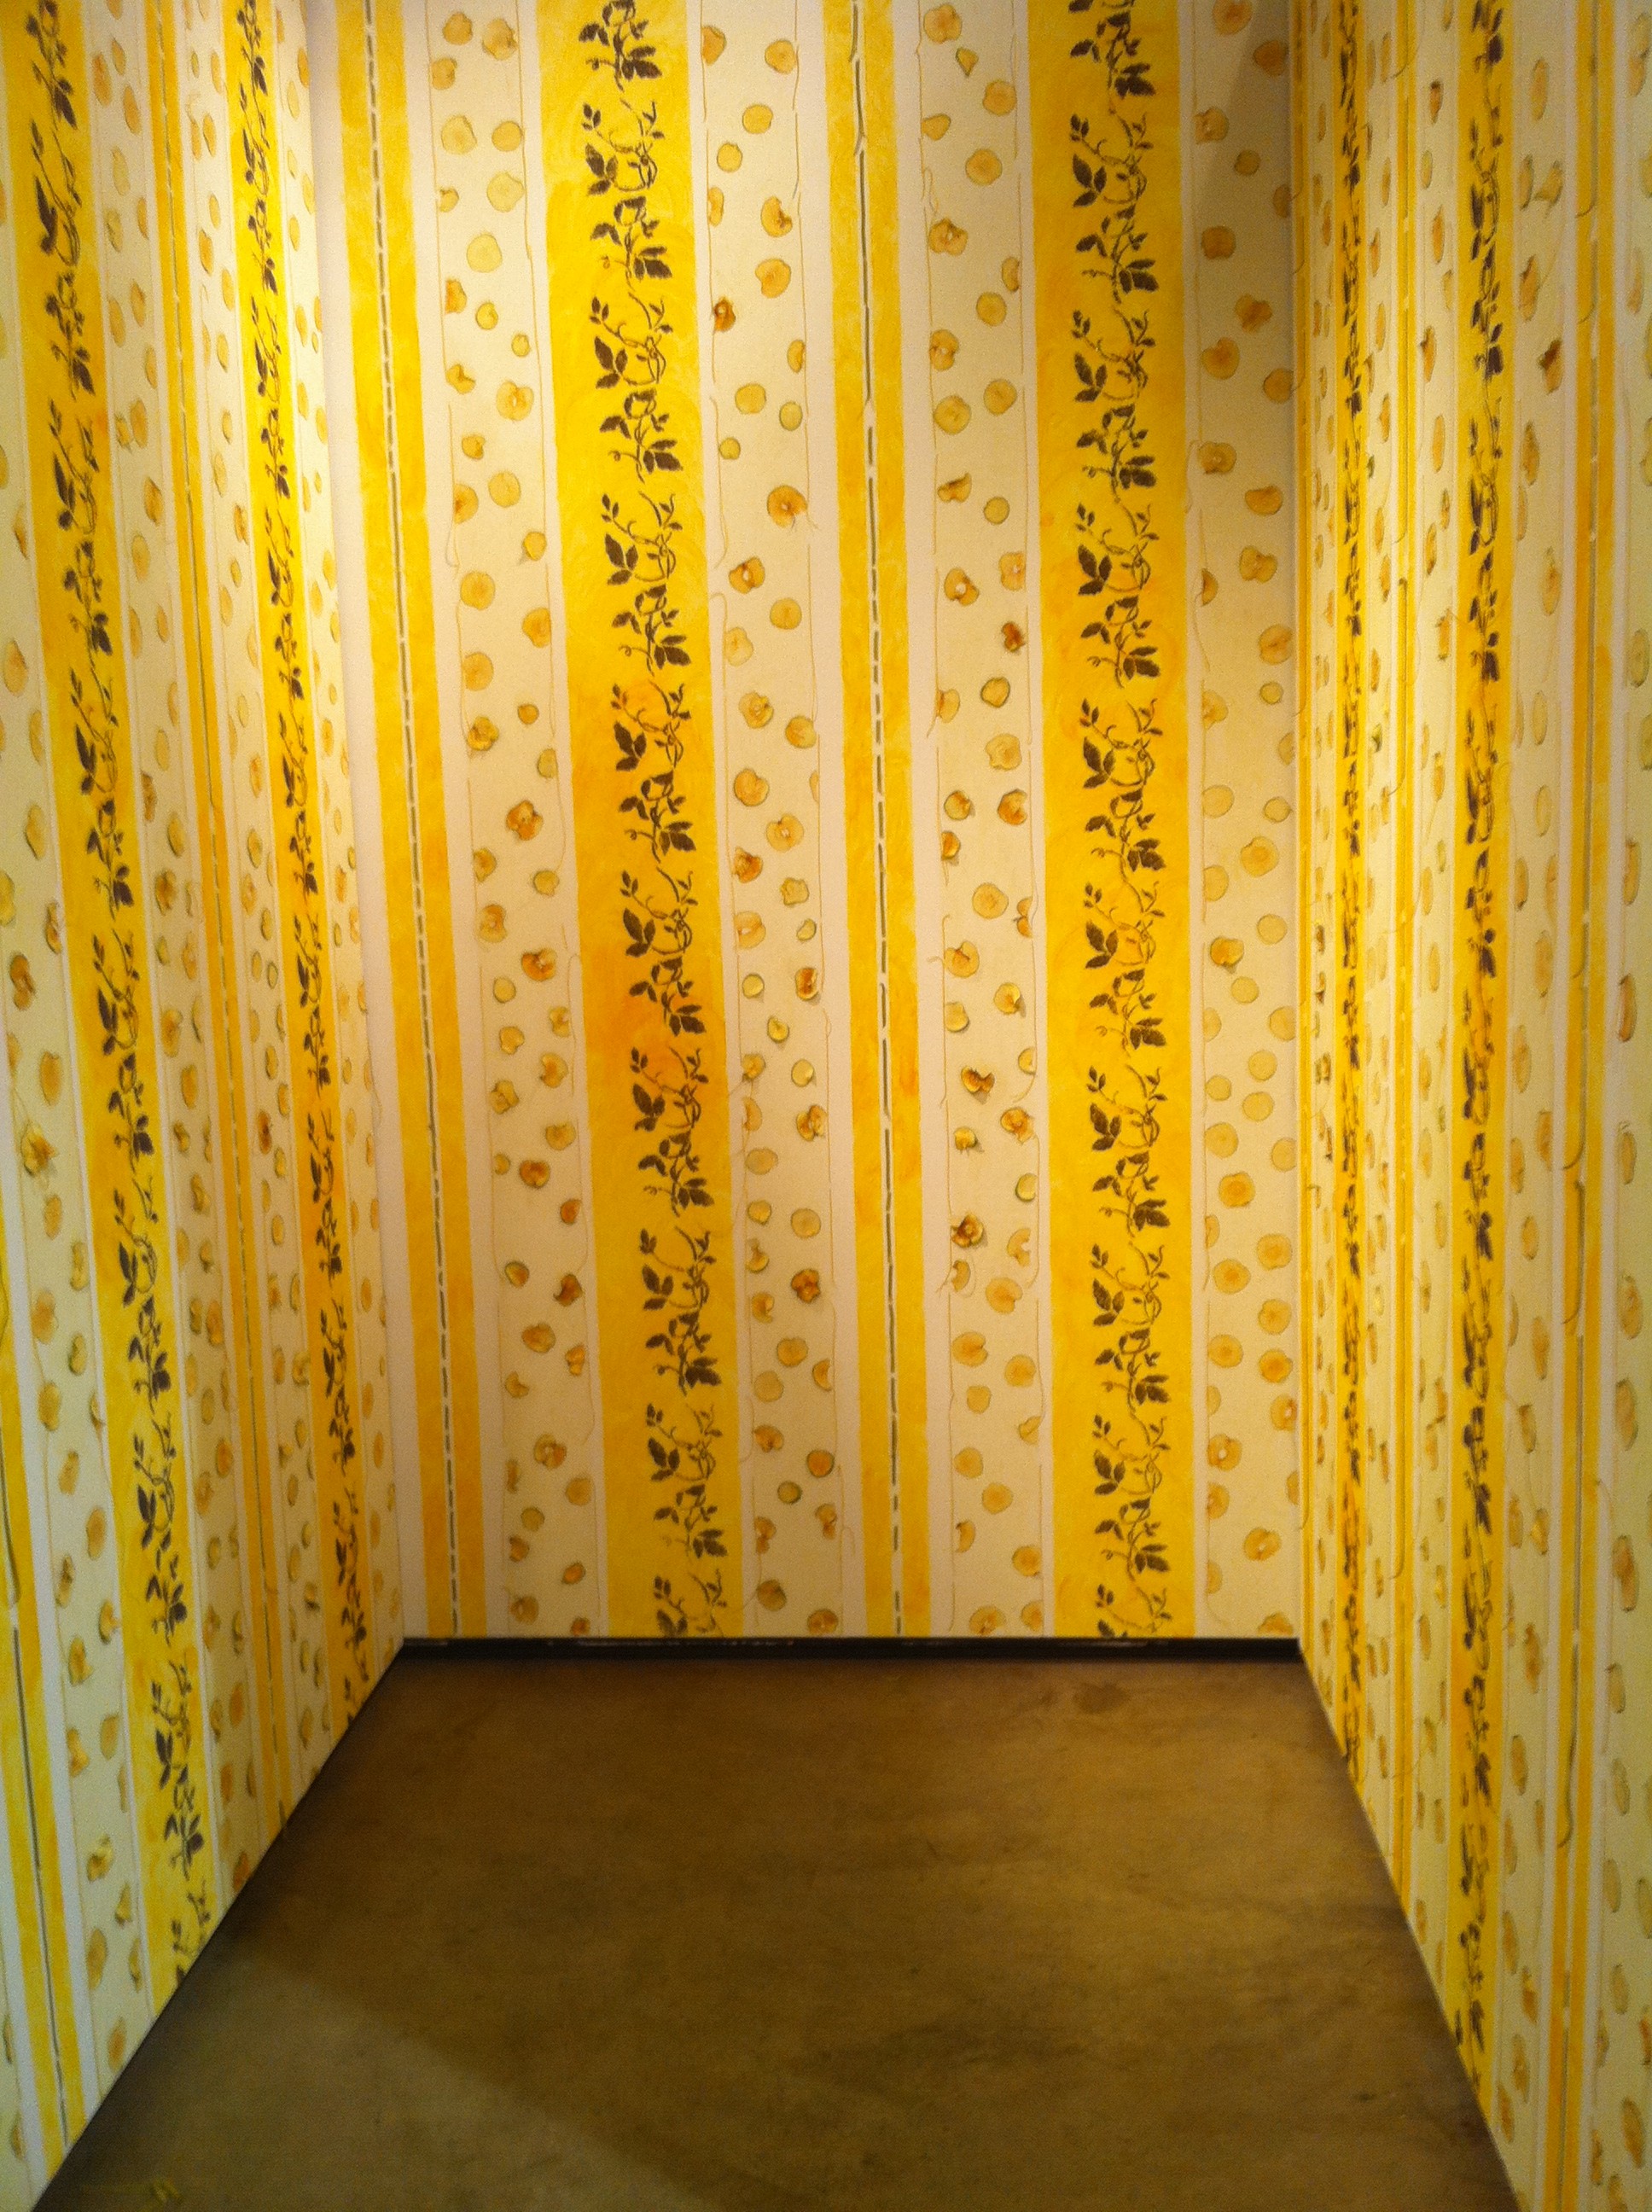 essay on the yellow wallpaper symbolism